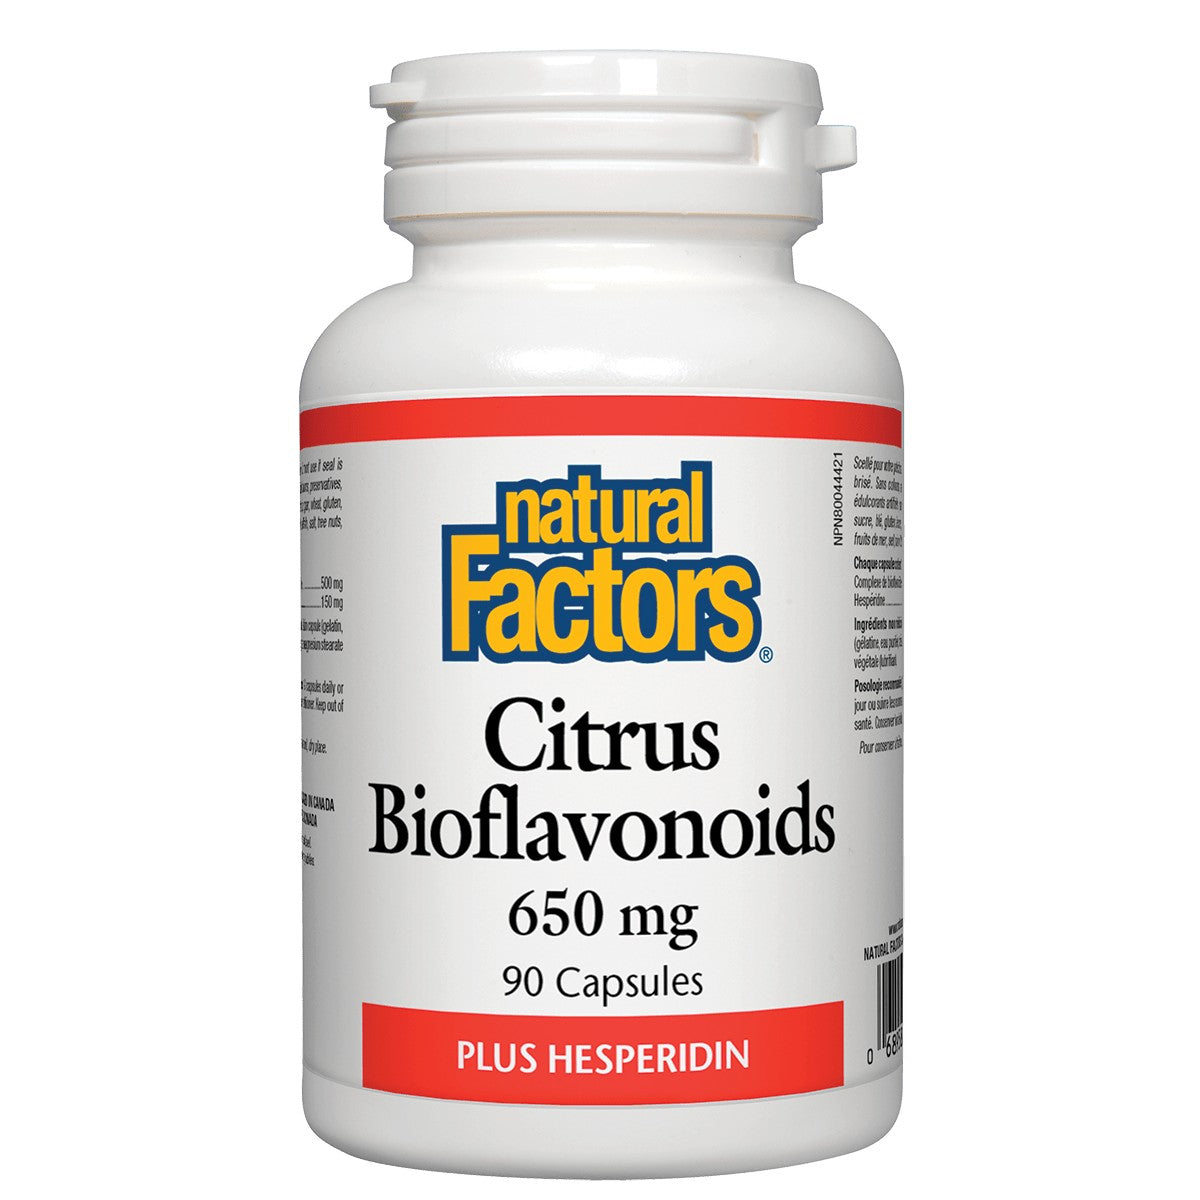 Natural Factors Citrus Bioflavonoids Plus Hesperidin 650 Mg